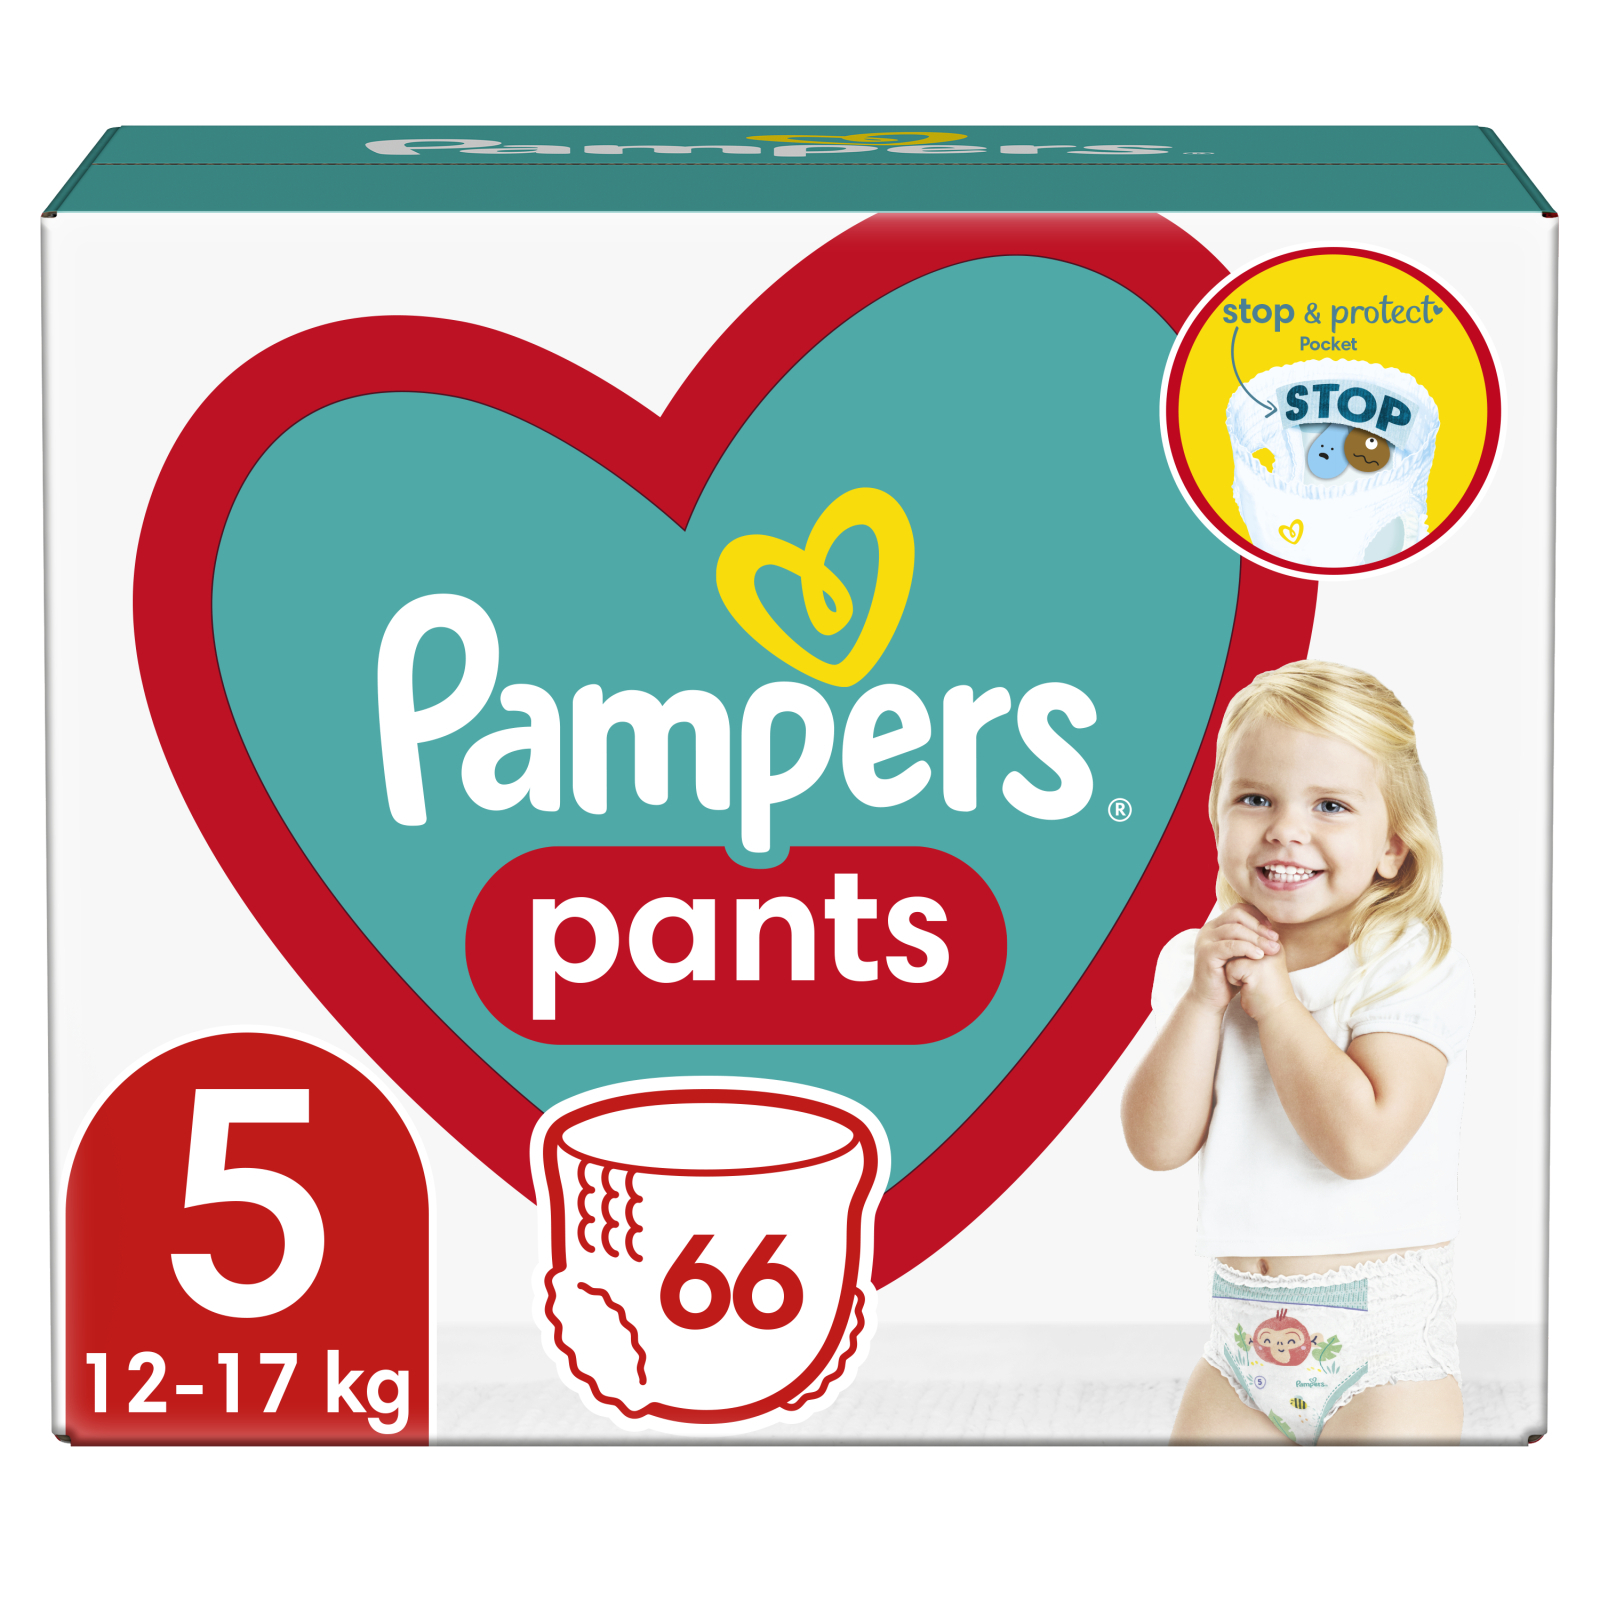 Підгузки Pampers трусики Pants Junior Розмір 5 (12-17 кг) 22 шт (8006540067772)